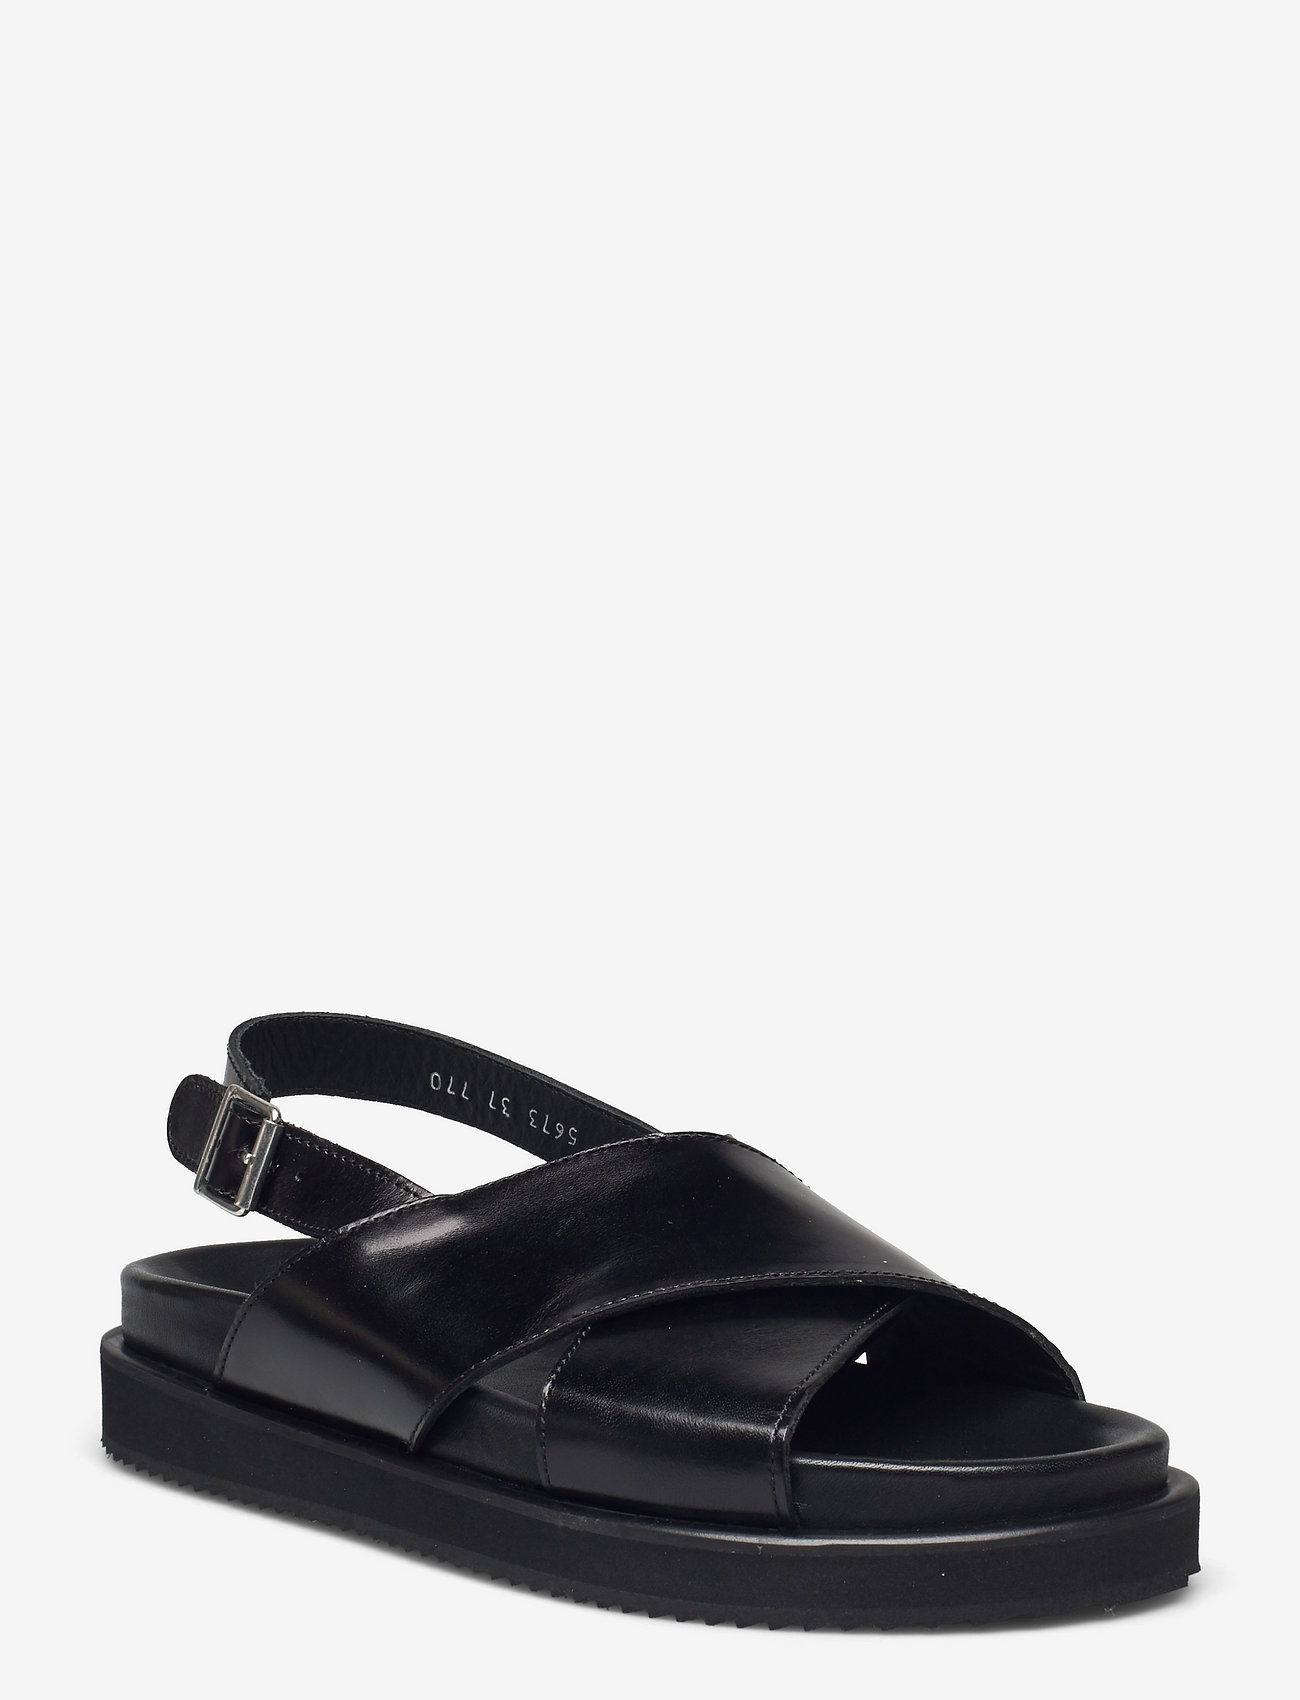 ANGULUS - Sandals - flat - open toe - op - flade sandaler - 1604/1835 black - 0